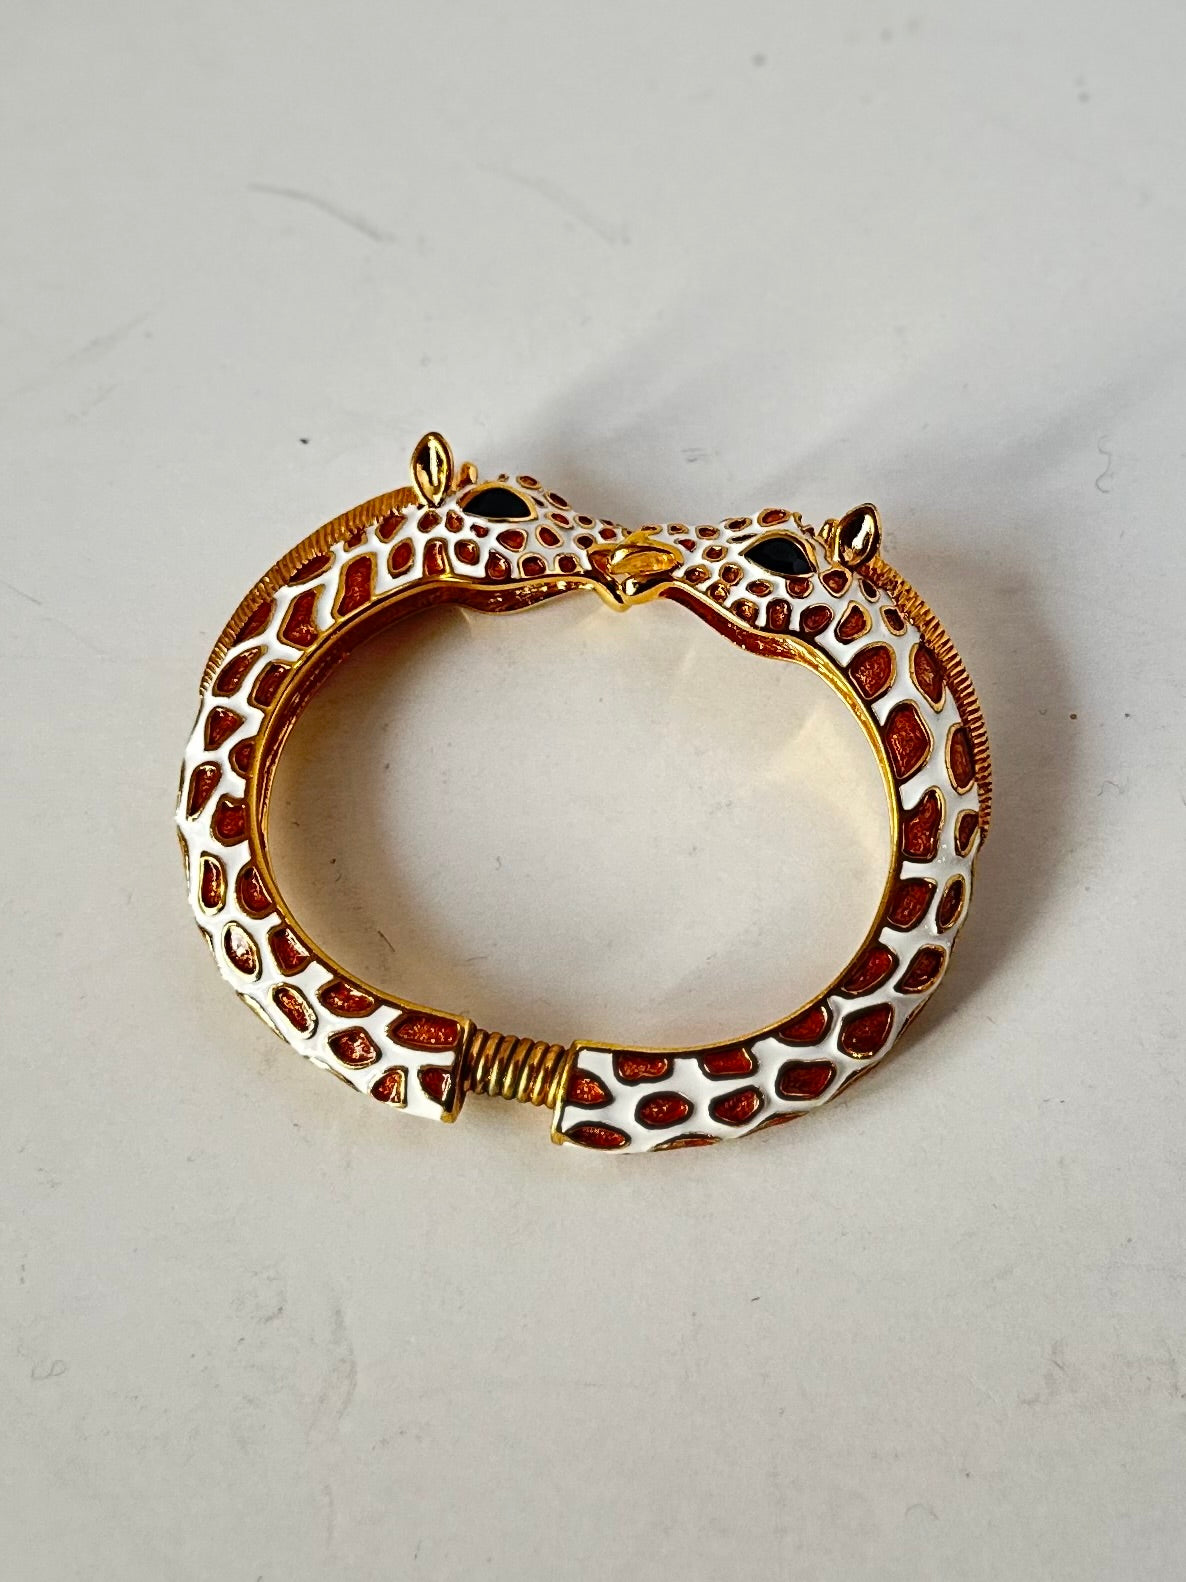 Vintage Kenneth Jay Lane Giraffe Clamp Bangle Bracelet